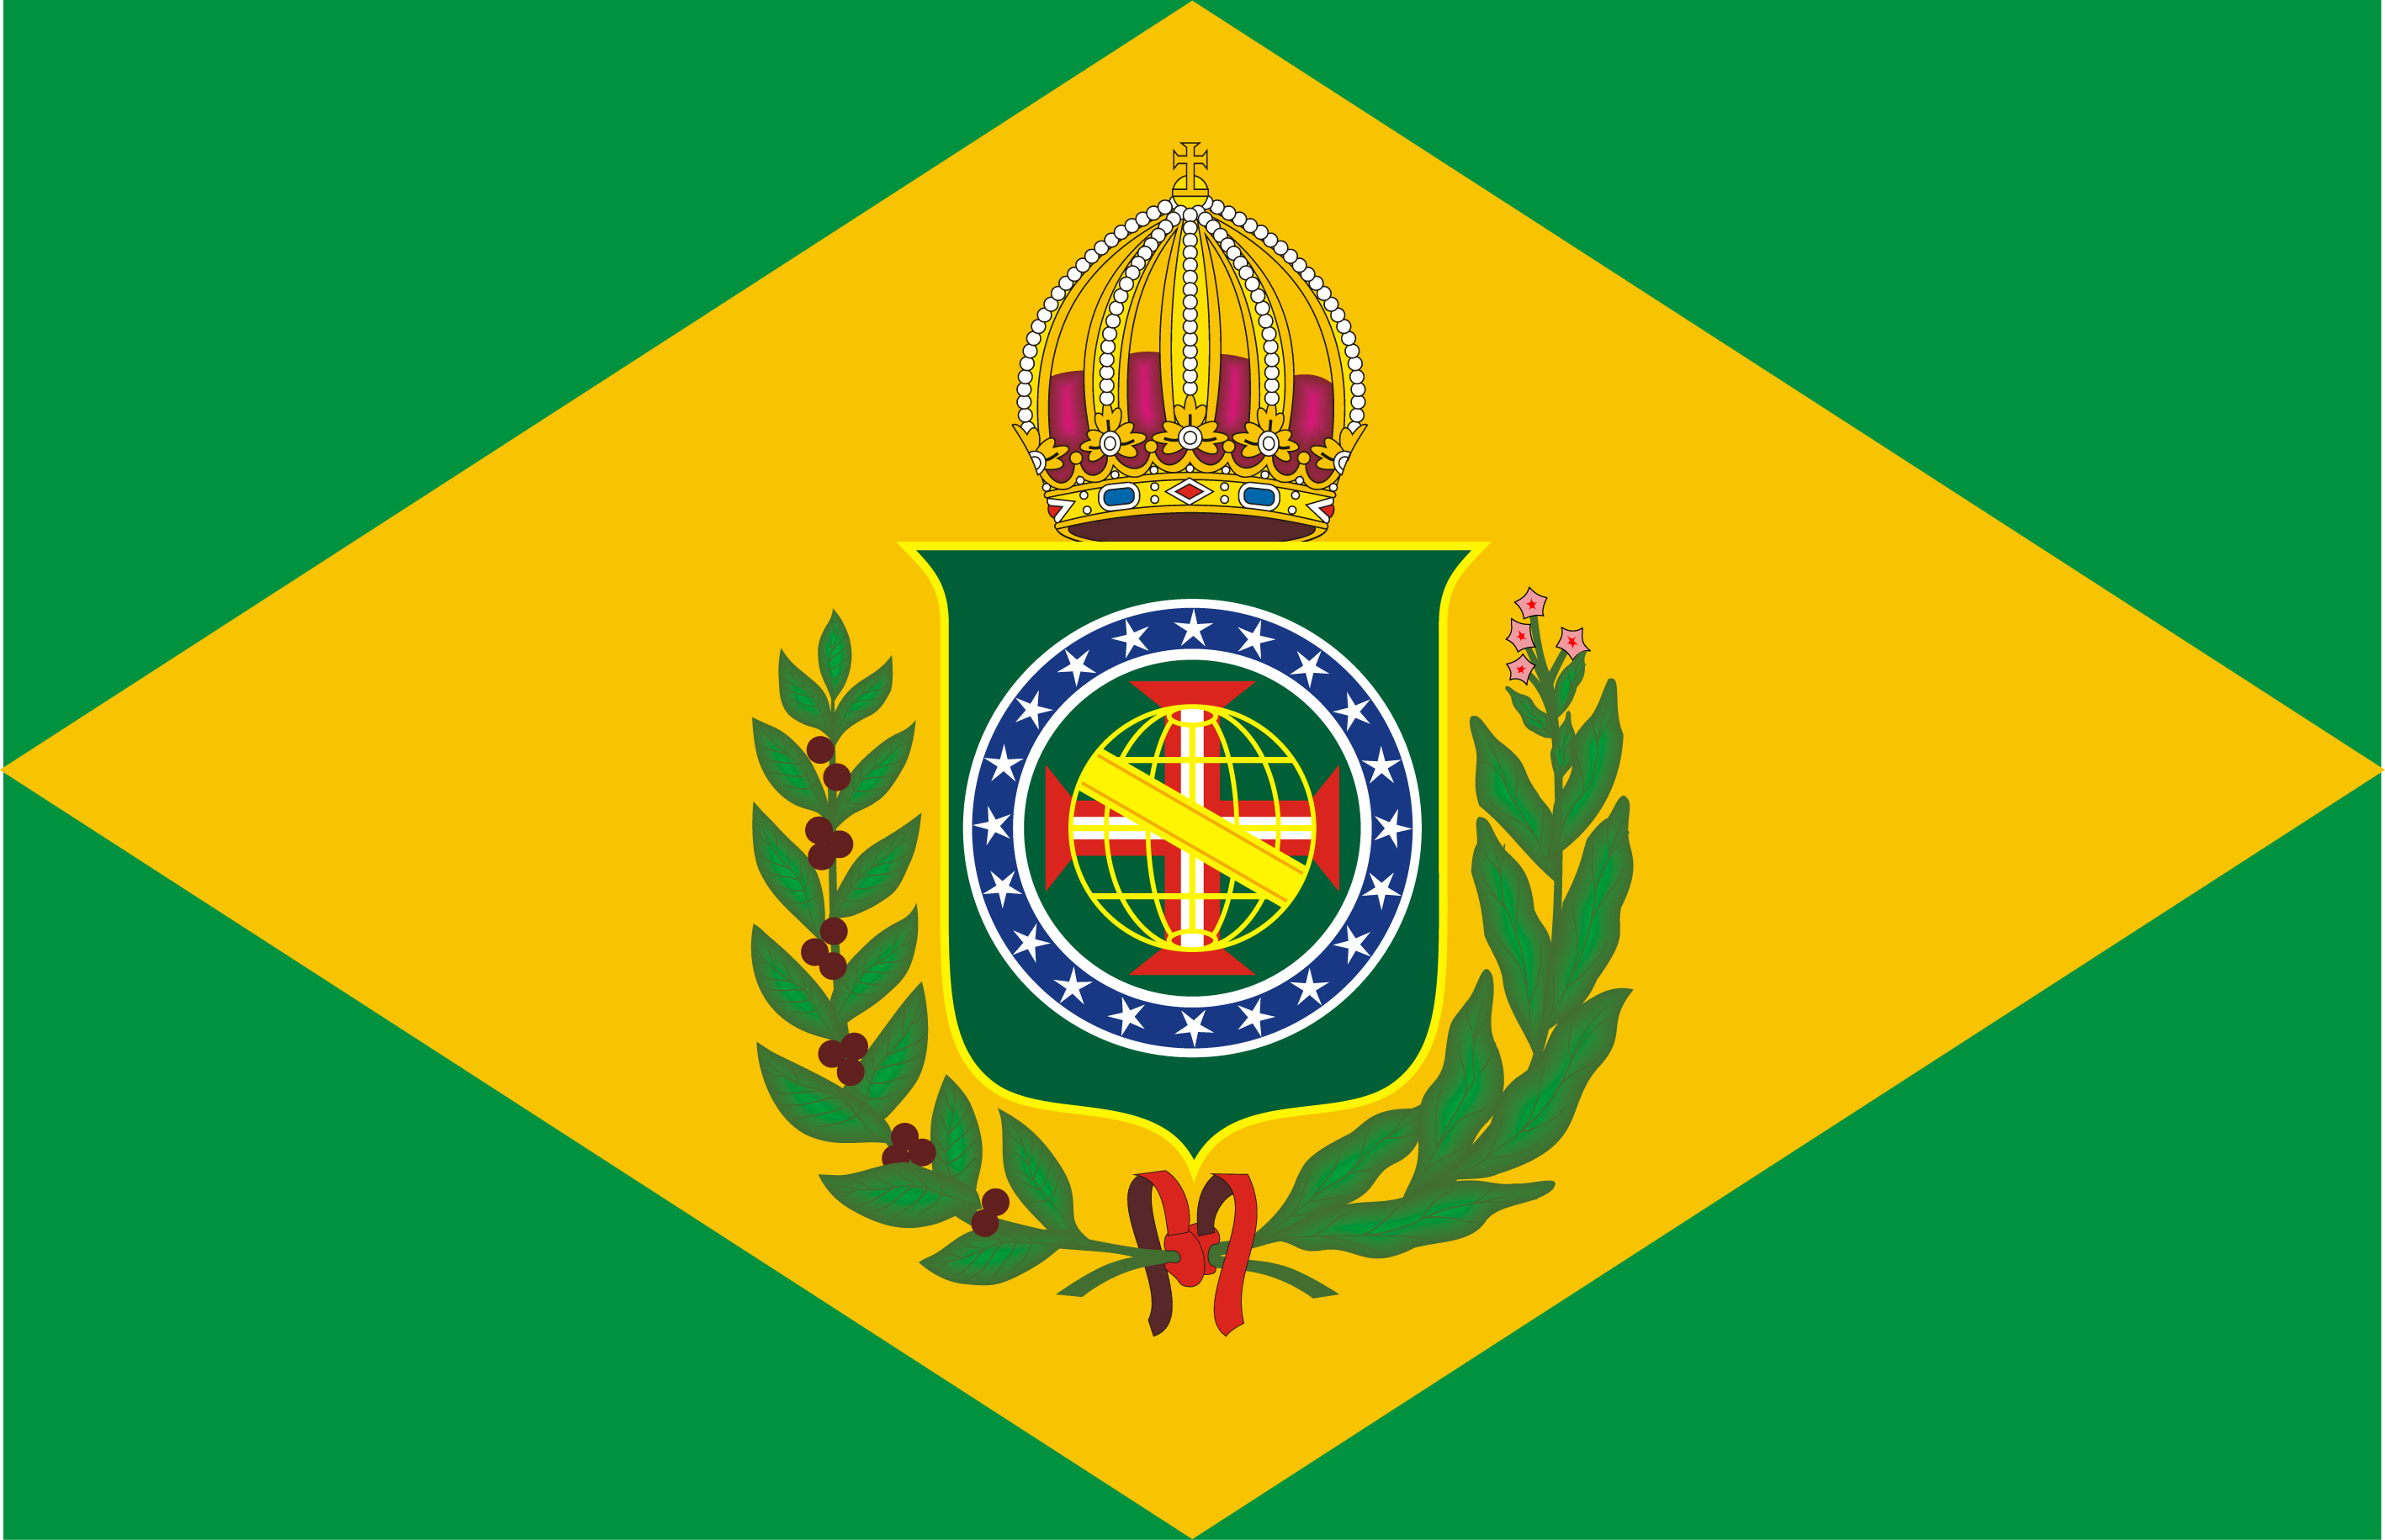 Second Empire Flag of Brazil